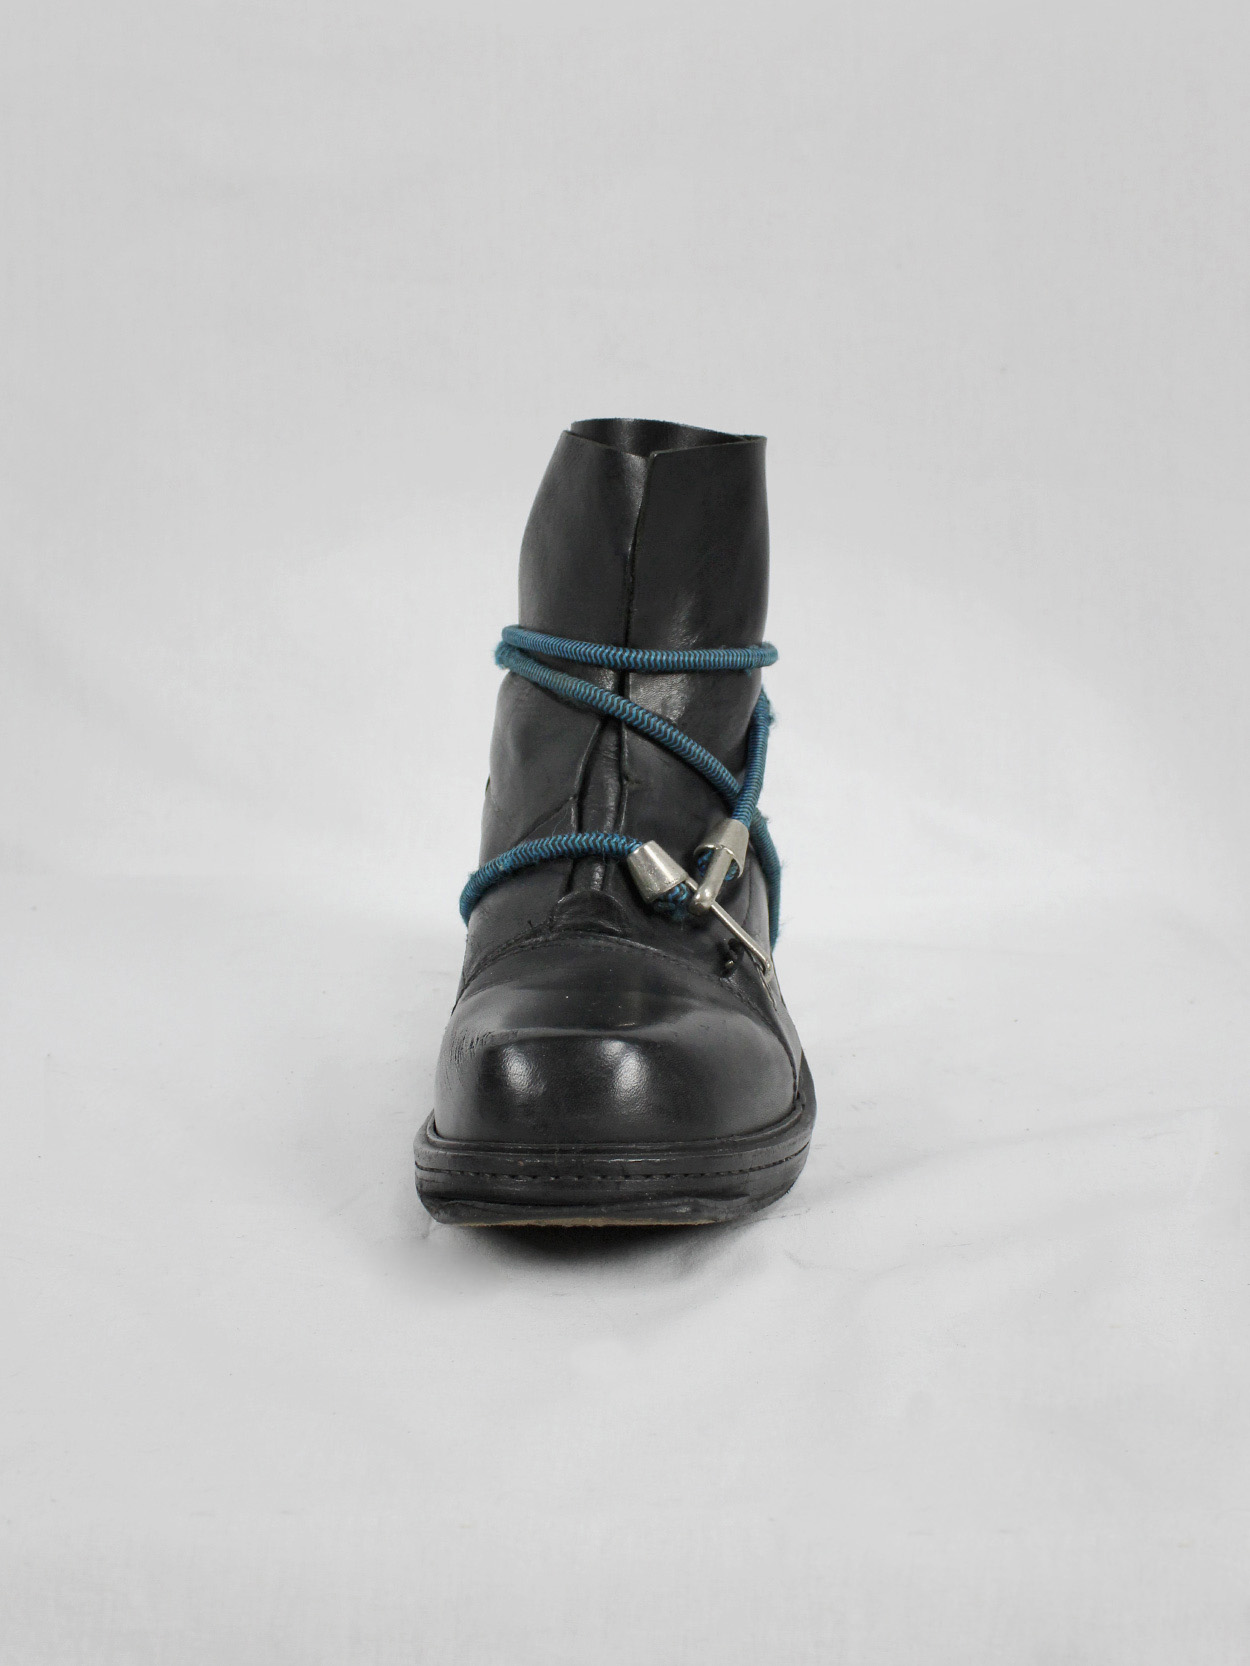 vaniitas vintage Dirk Bikkembergs black mountaineering boots with blue elastic fall 1996 7764